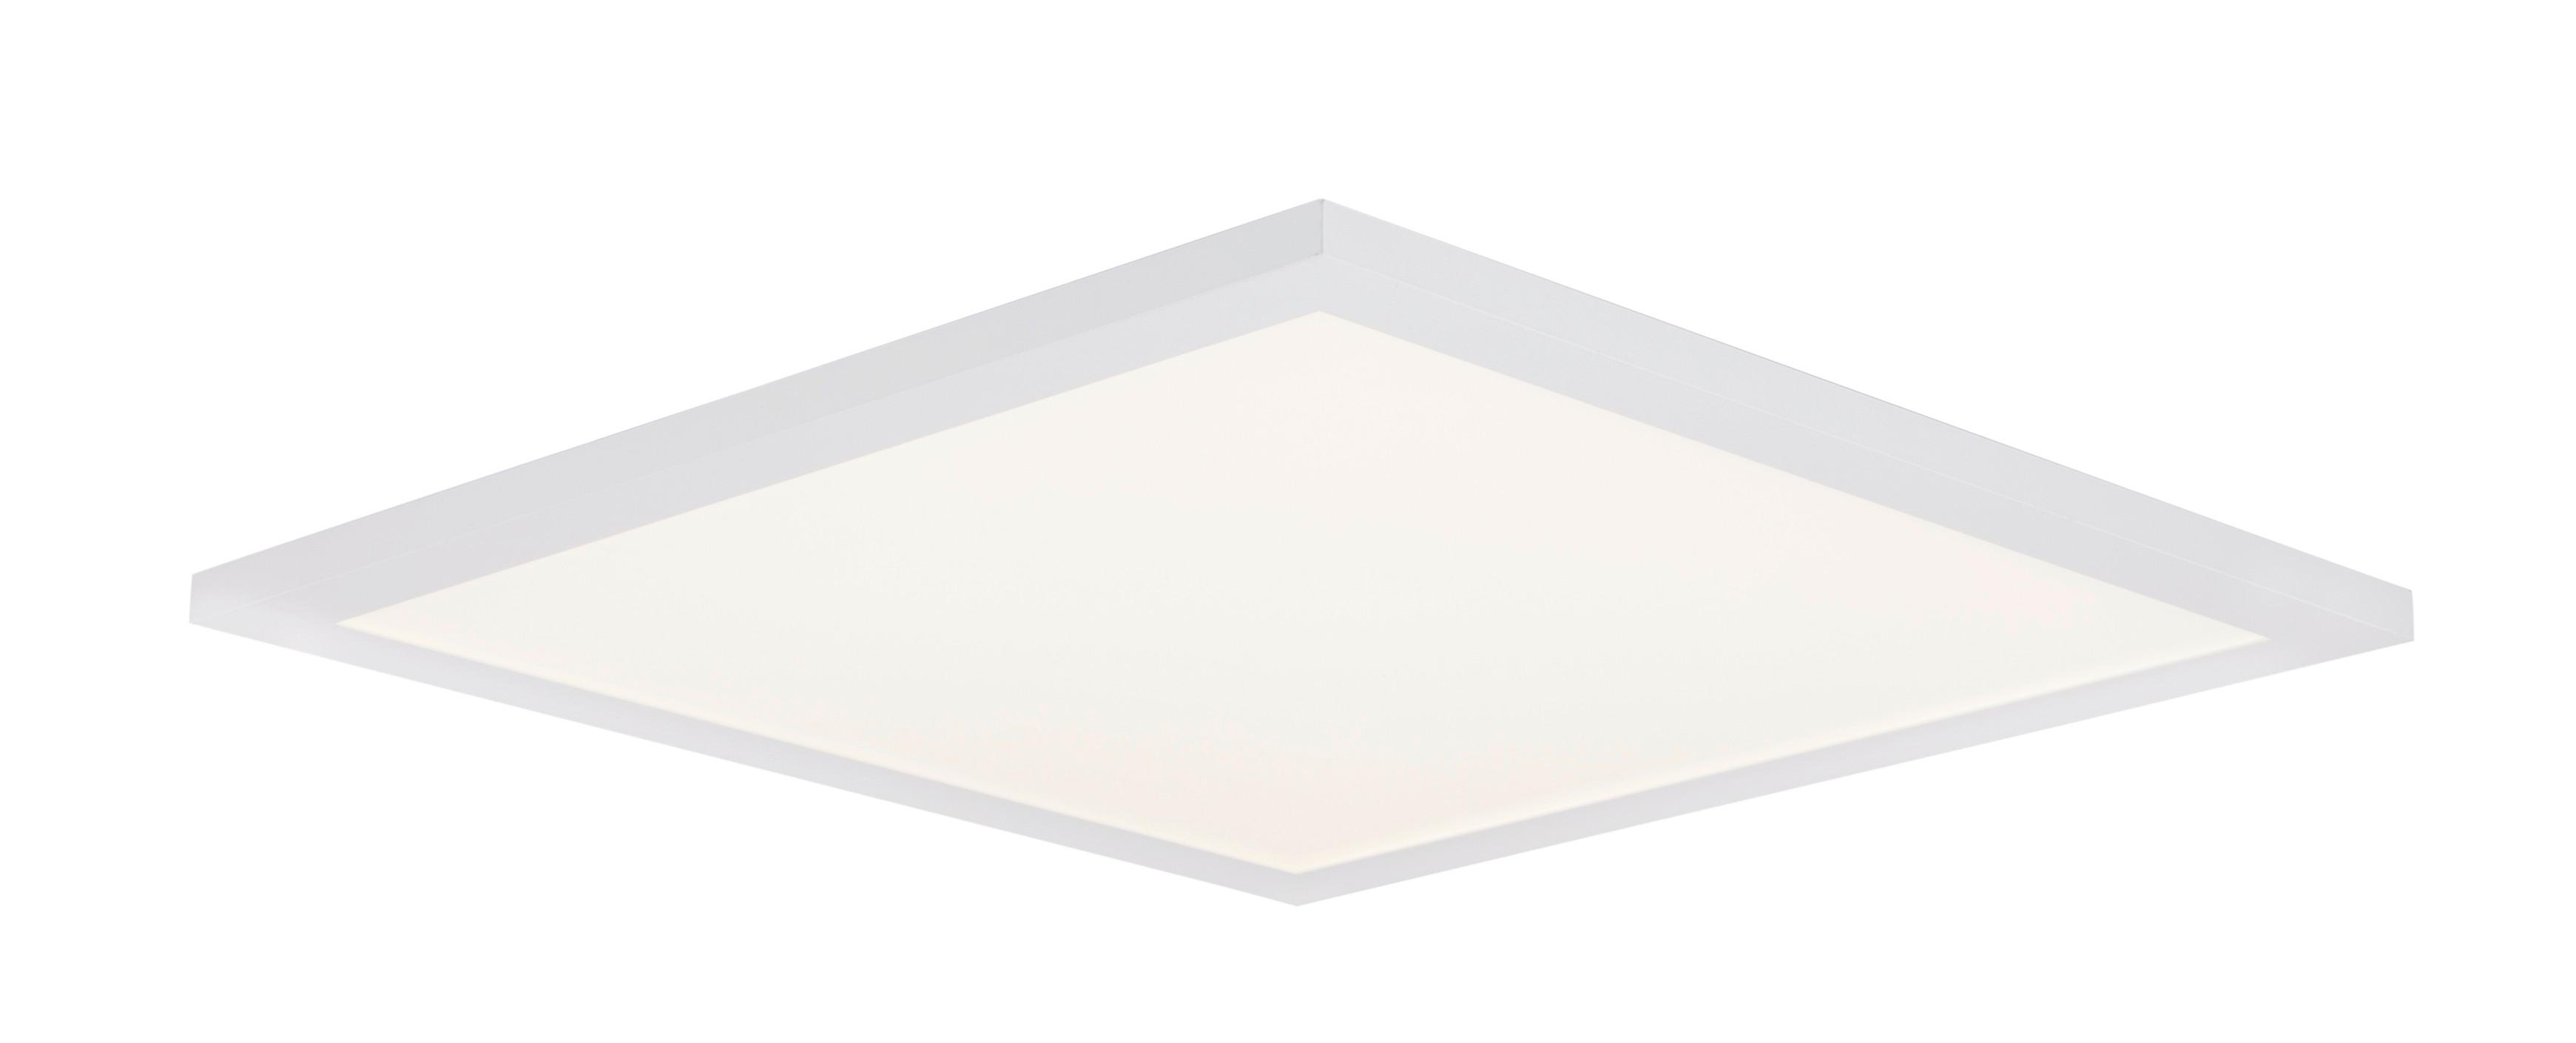 LED-Deckenleuchte Rosi L: 45 cm - Opal/Weiß, Basics, Kunststoff/Metall (45/45/5cm) - Globo